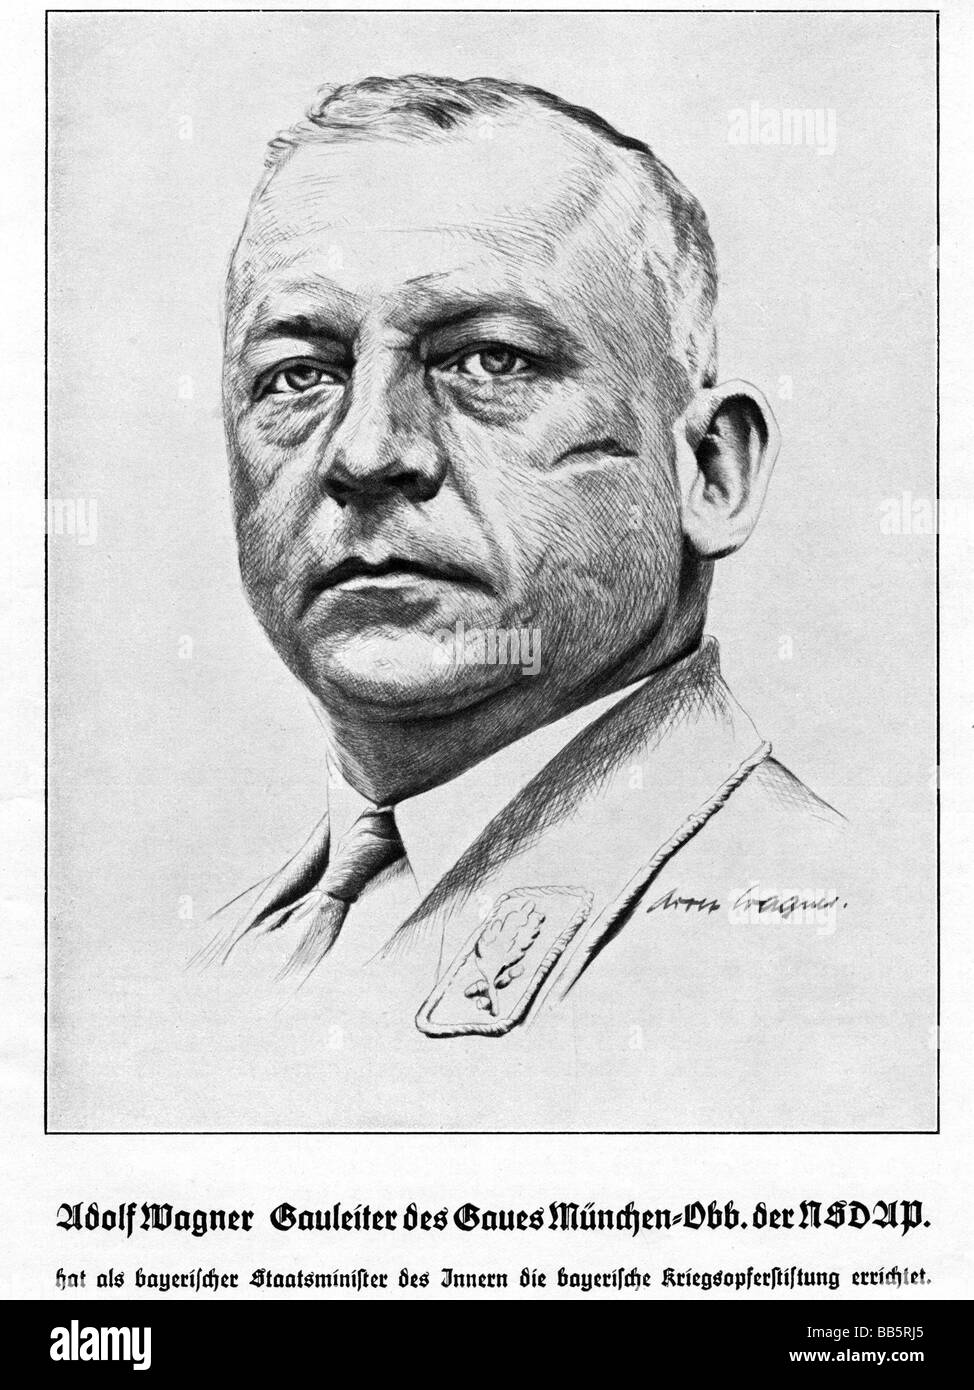 Wagner, Adolf, 1.10.1890 - 12.4.1944, German politician (NSDAP), Gauleiter of Munich-Upper Bavaria 1.11.1930 - 12.4.1944, portrait, drawing, 1930s, , Stock Photo